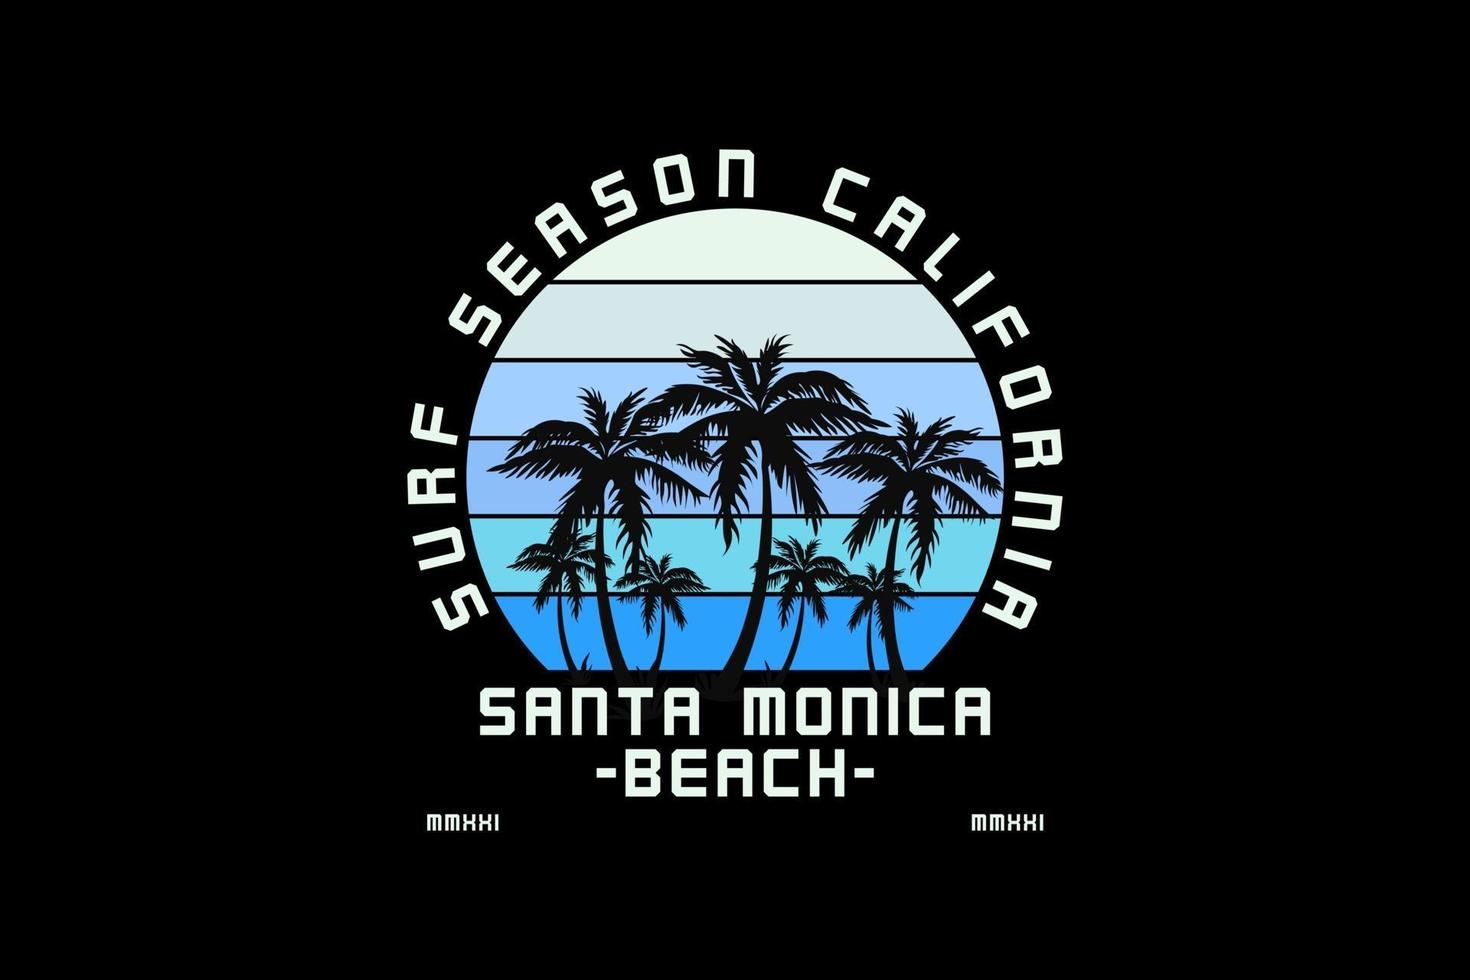 17 temporada de surf california, silueta estilo retro vintage vector